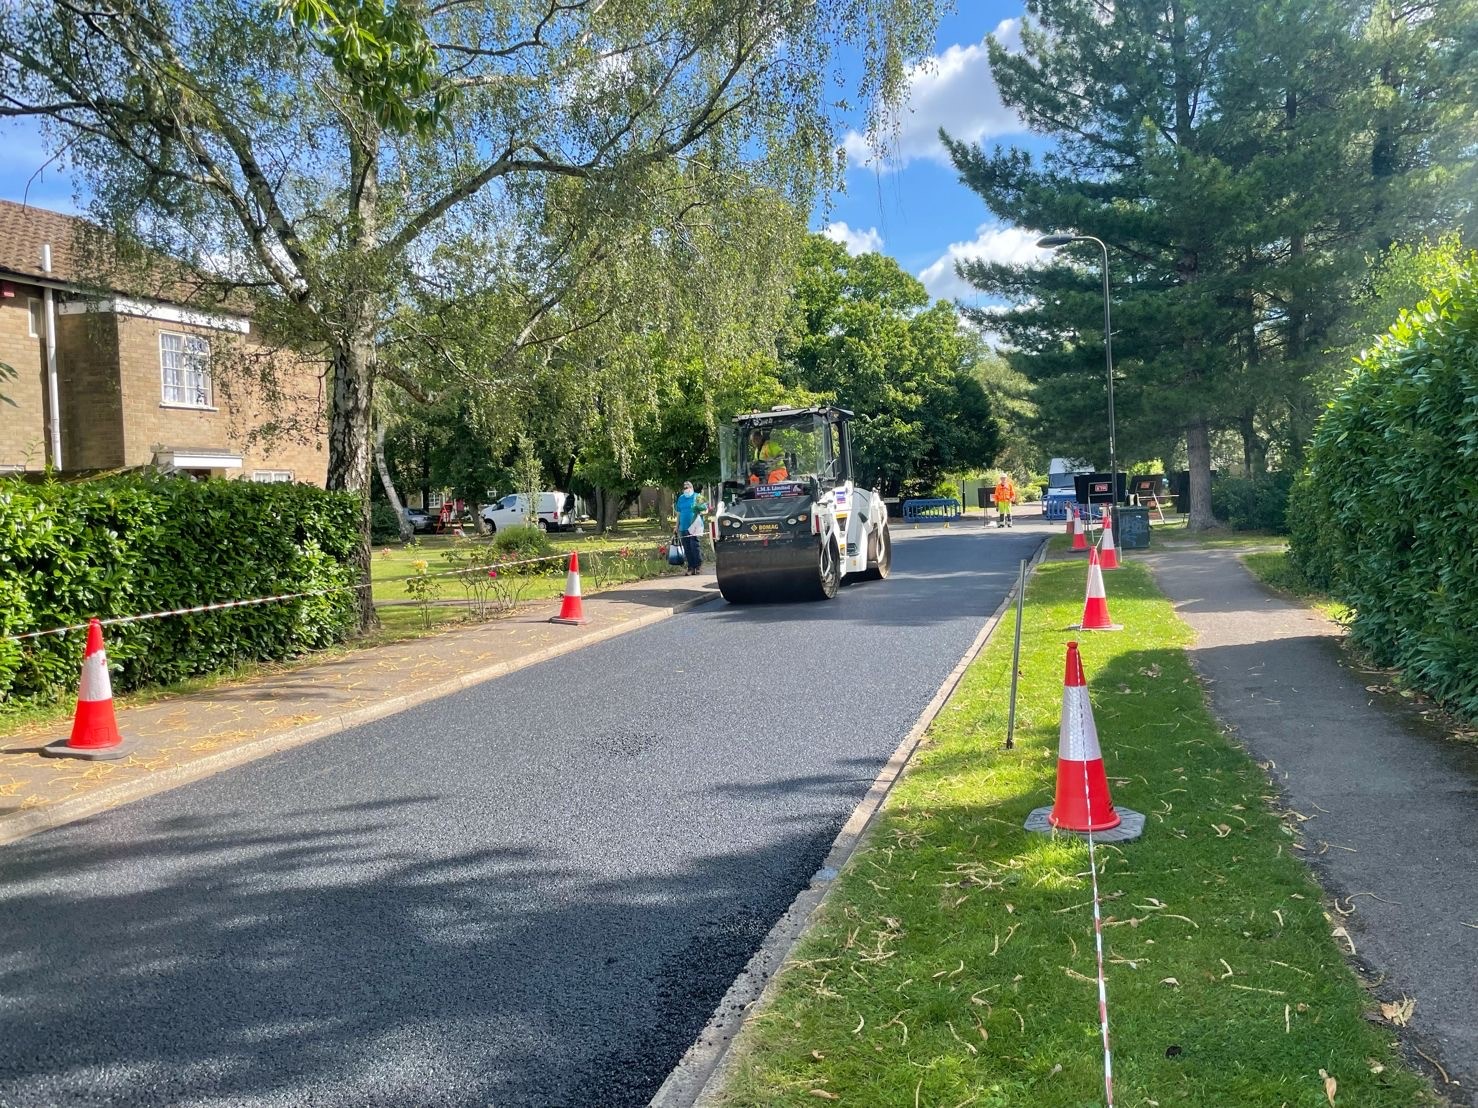 Road resurfacing work at Pine Drive in Harefield